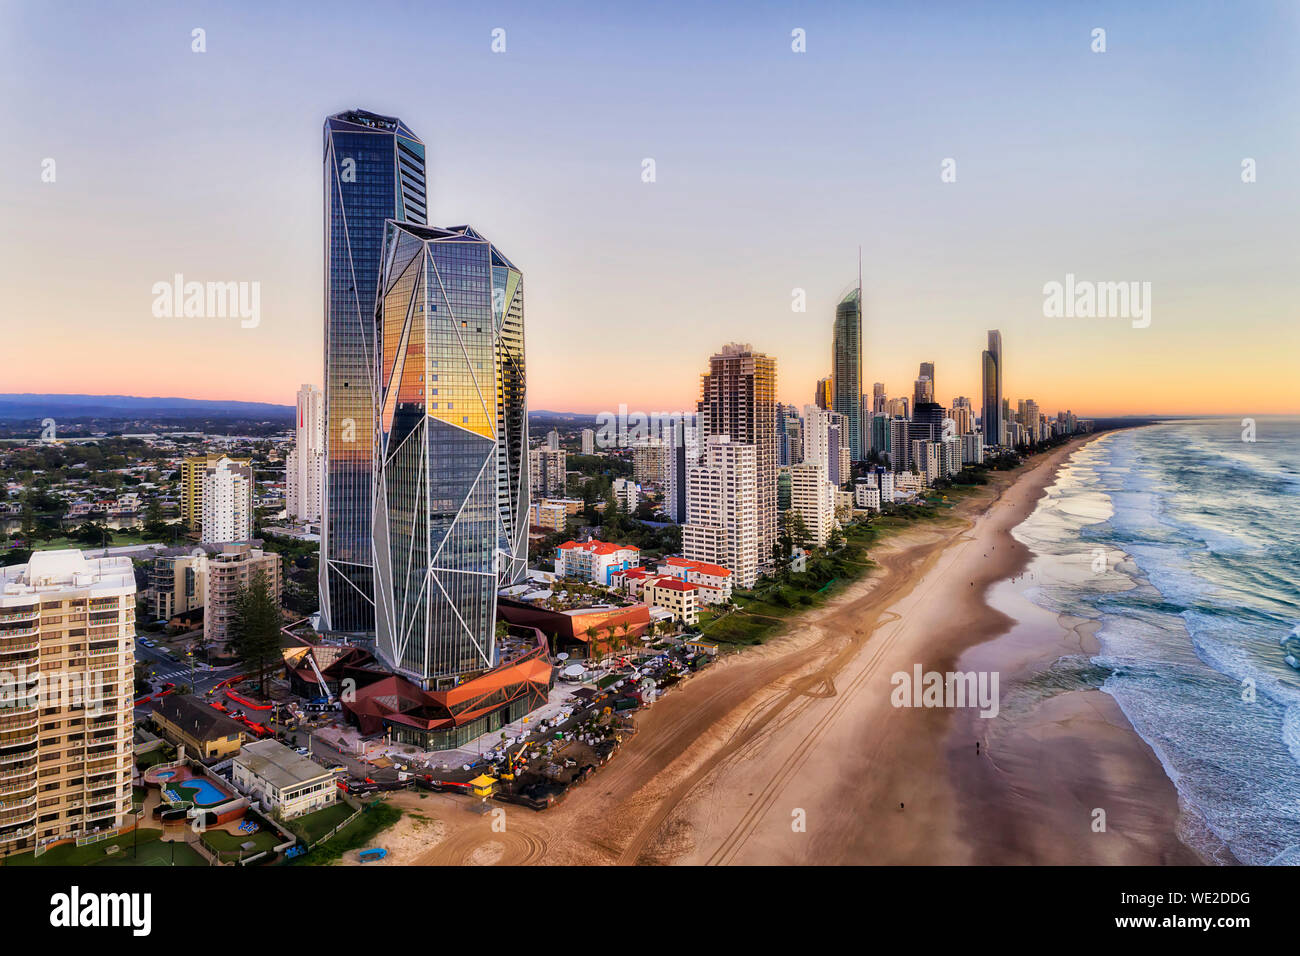 Sfaccettature riflettenti di urbana moderna ad alte torri su Australian Gold Coast di Queensland - Surfers Paradise. Ampia di sabbia spiaggia lunga di Pacific shore a Foto Stock